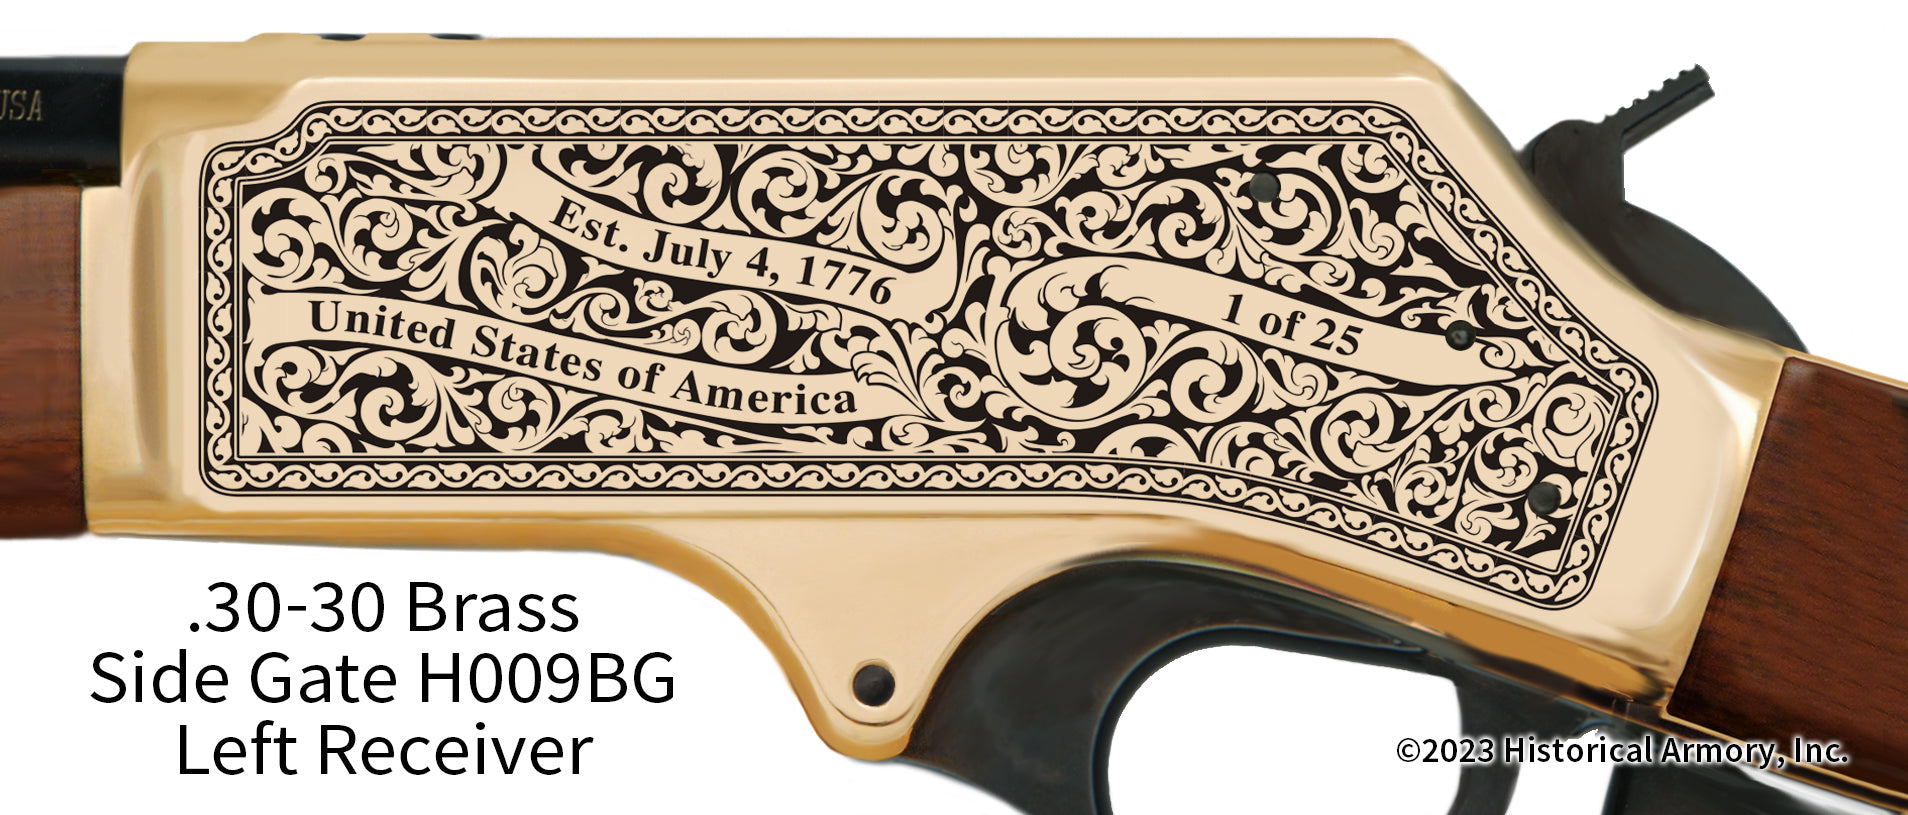 Adair County Iowa Engraved Henry .30-30 Brass Side Gate Rifle